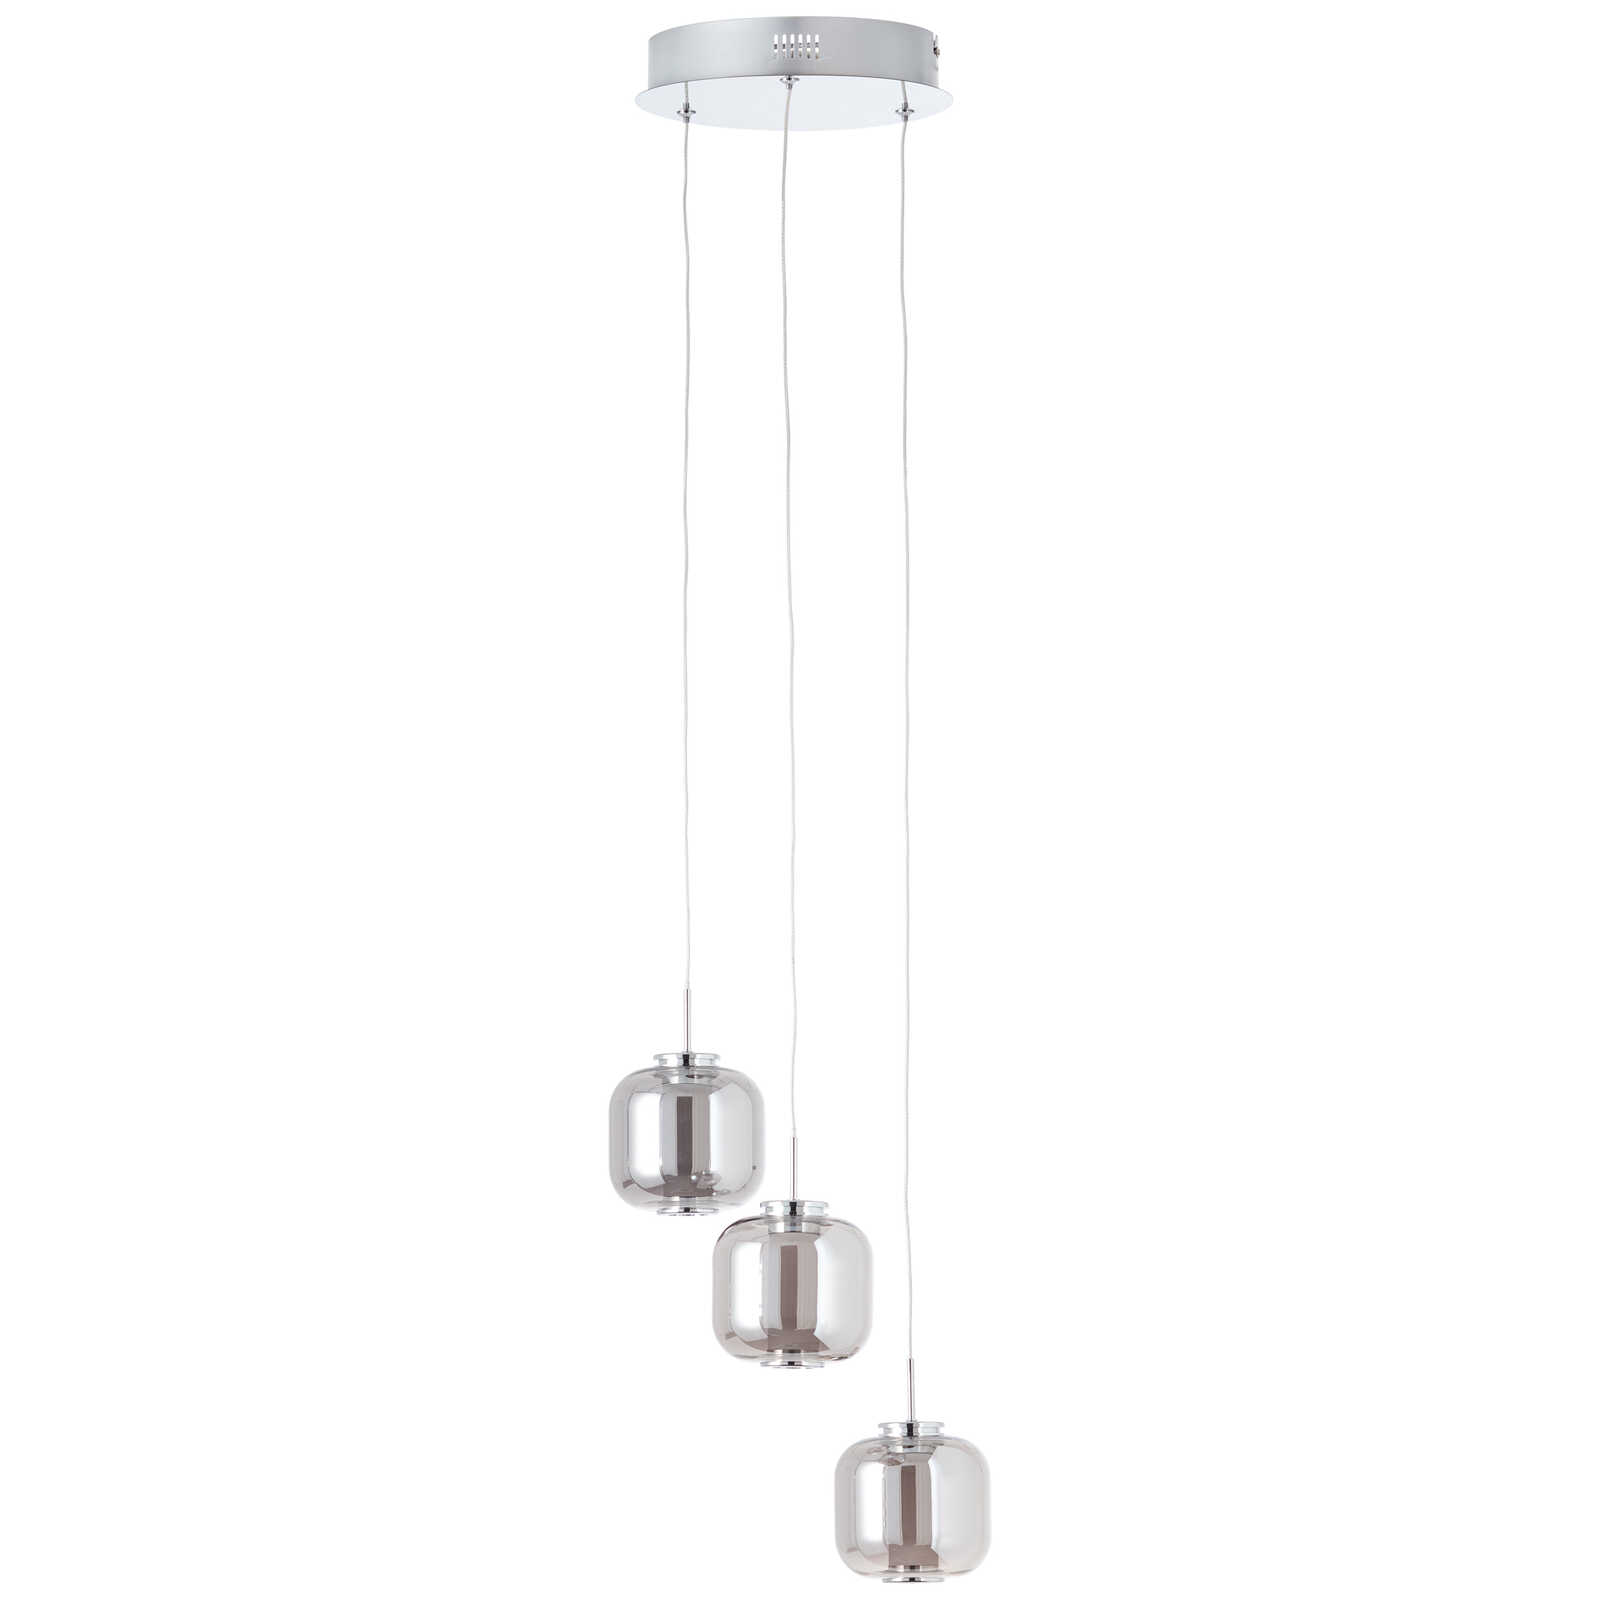             Glazen hanglamp - Martin 2 - Grijs
        